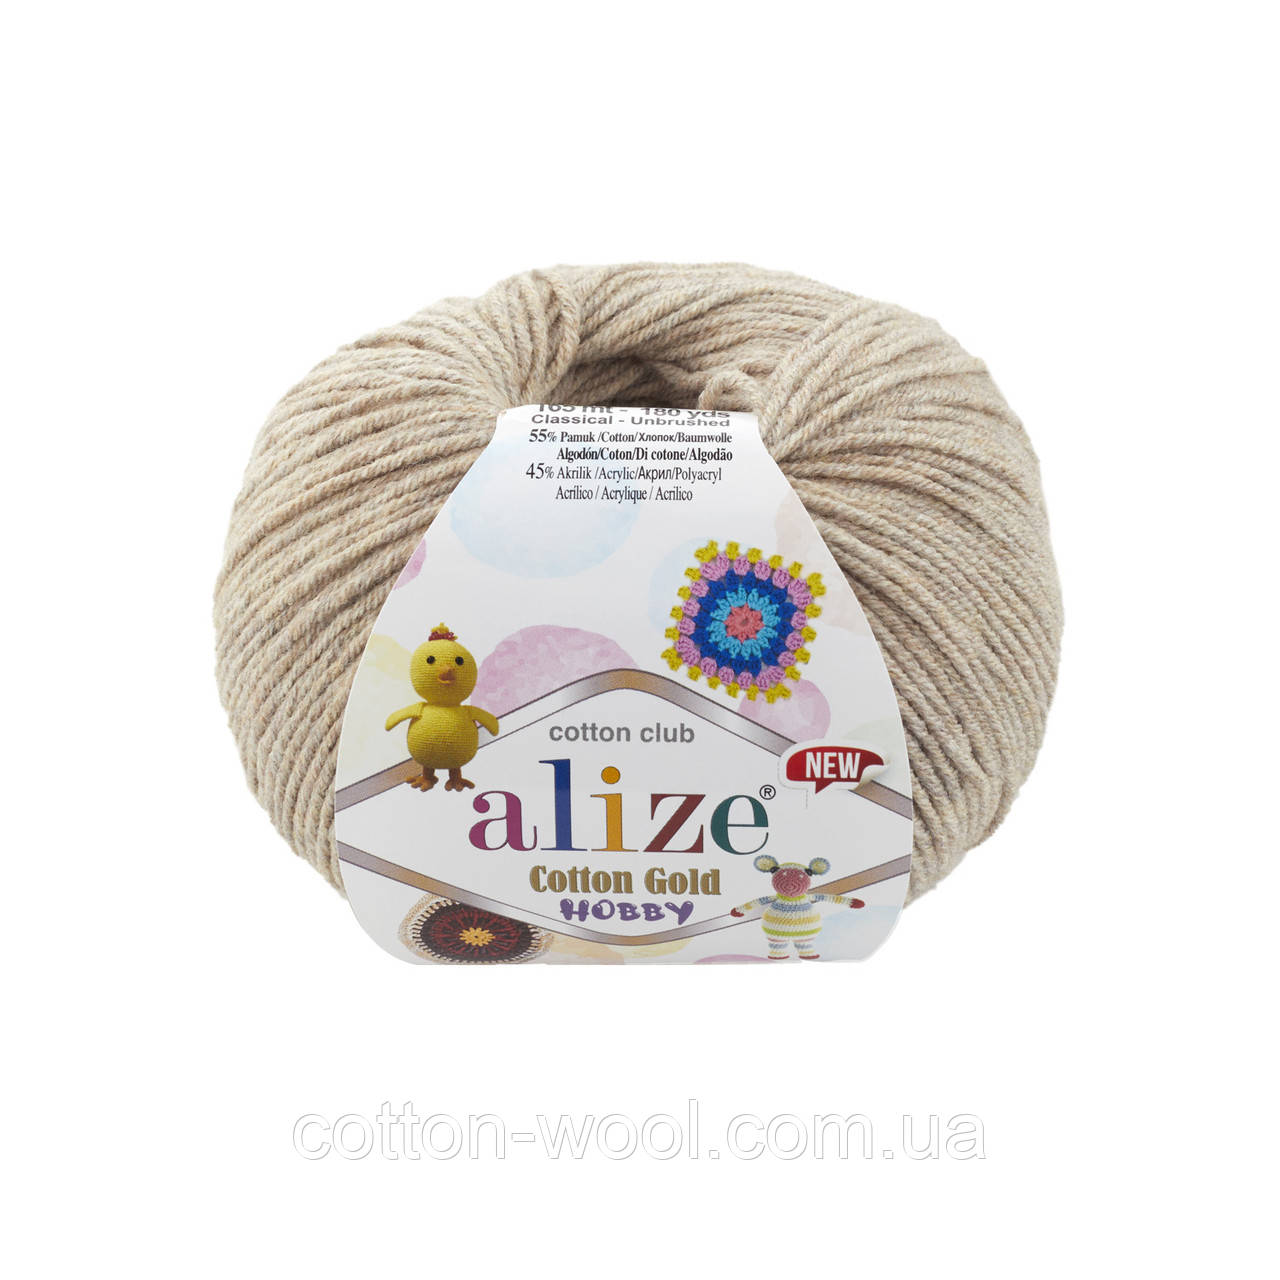 Alize Cotton Gold Hobby New (Коттон голд хобі) 152